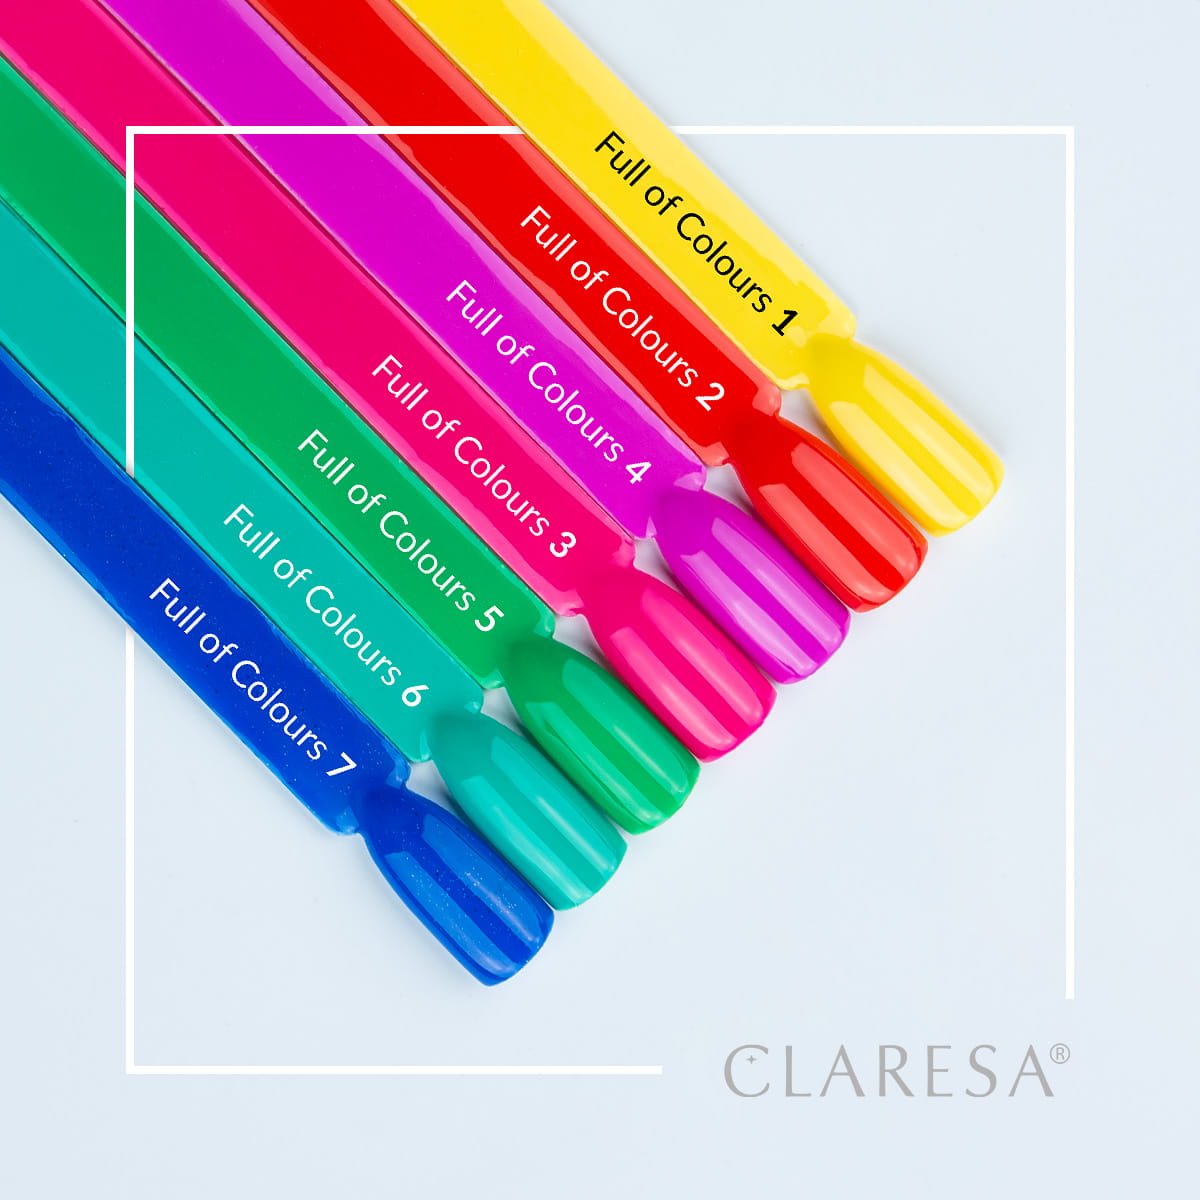 CLARESA Full of colours Hybrid Polish 1 -5g